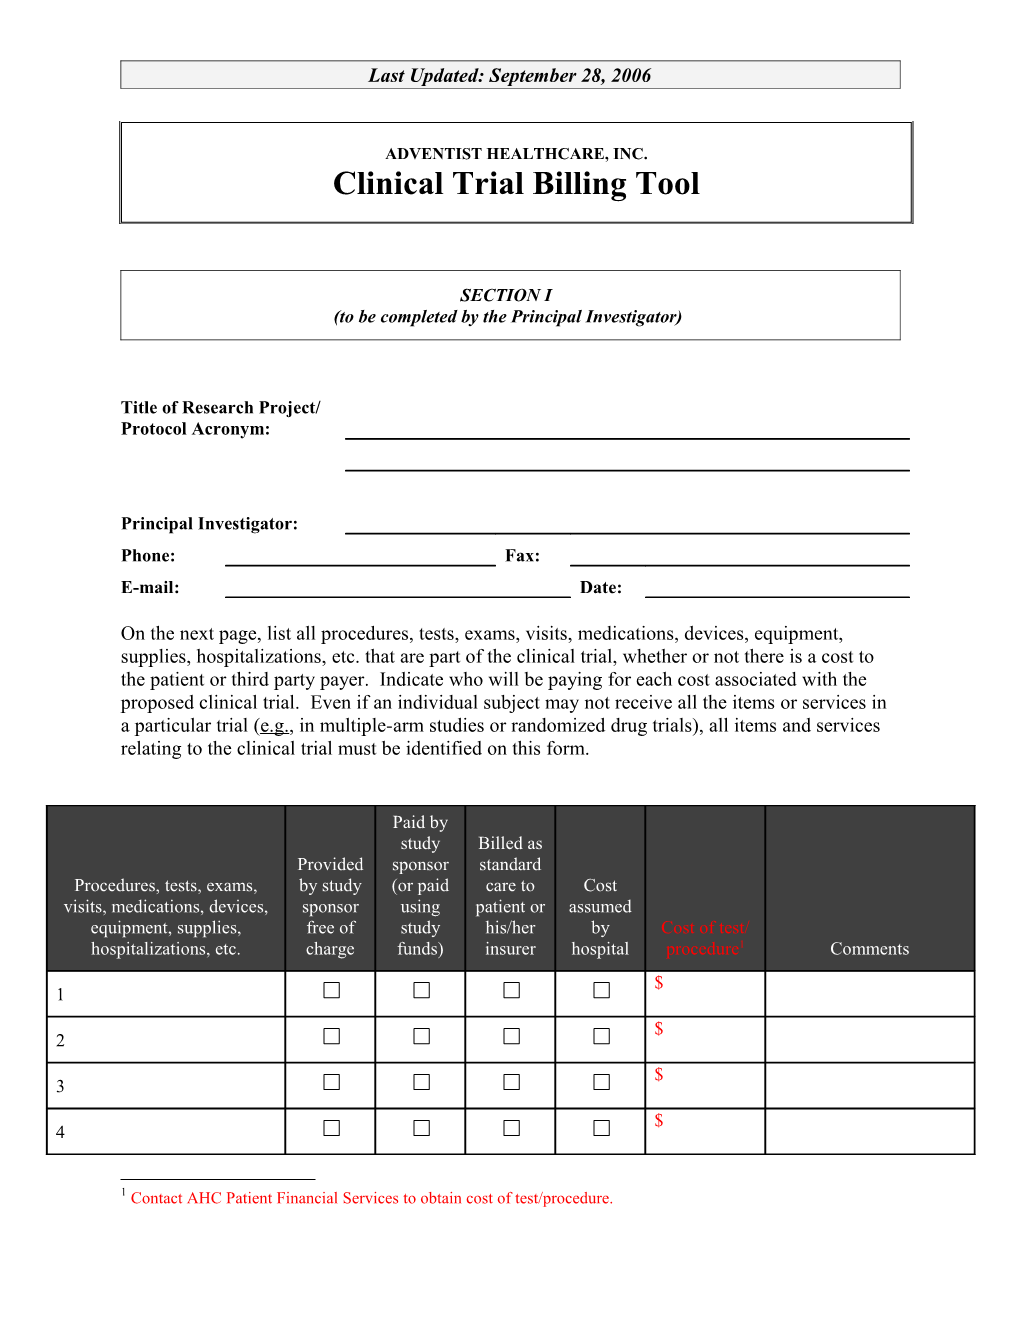 Adventist Healthcare Informed Consent Checklist